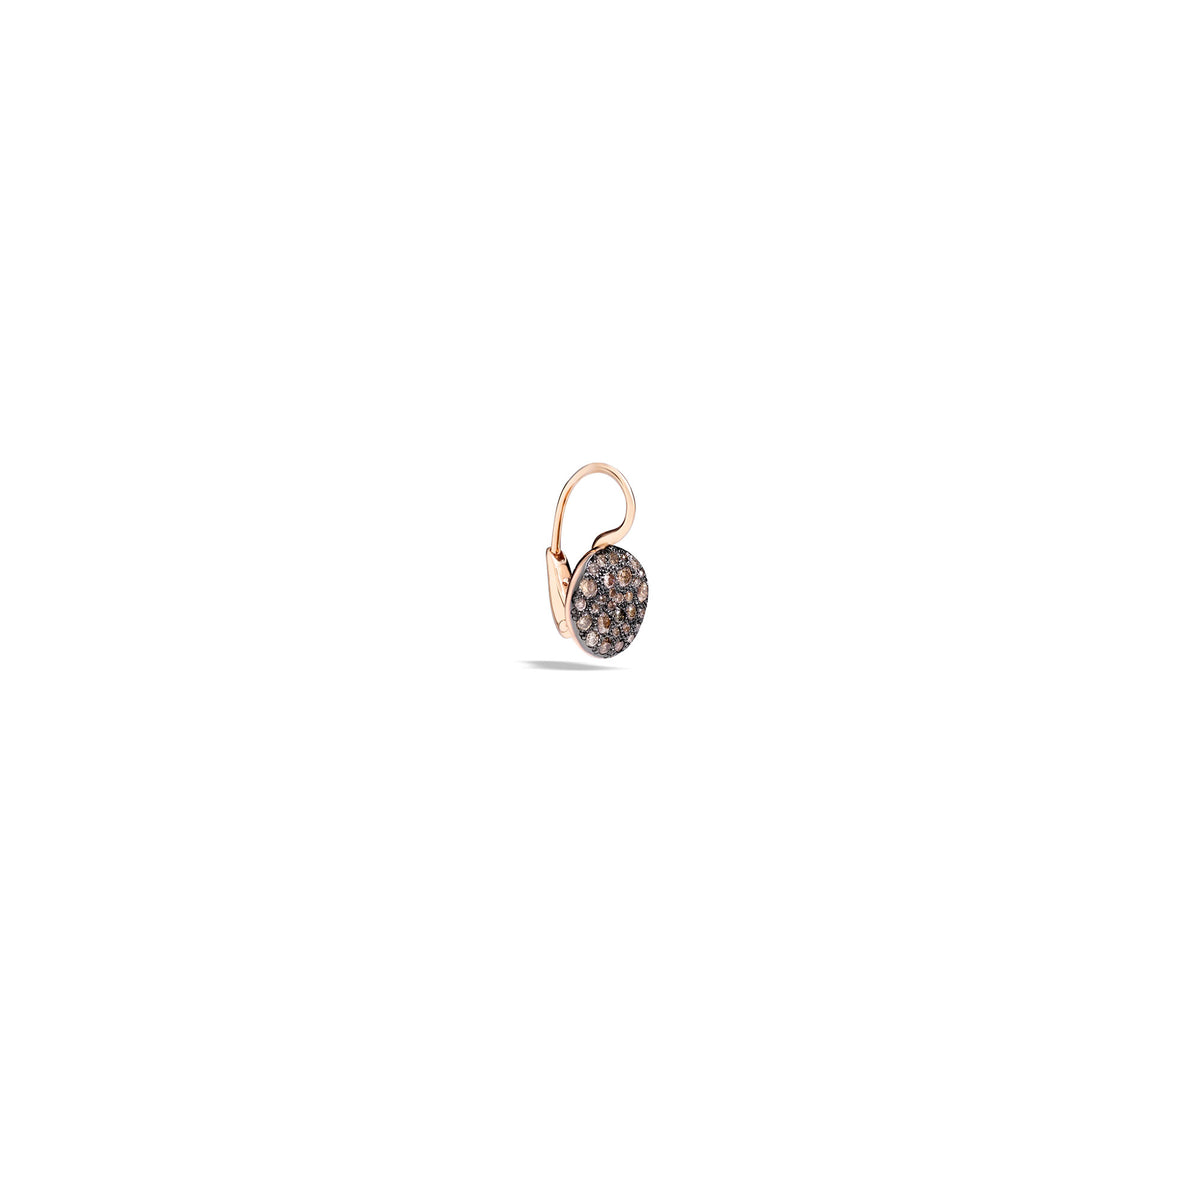 Sabbia Earrings in 18k Rose Gold with Brown Diamonds - Orsini Jewellers NZ